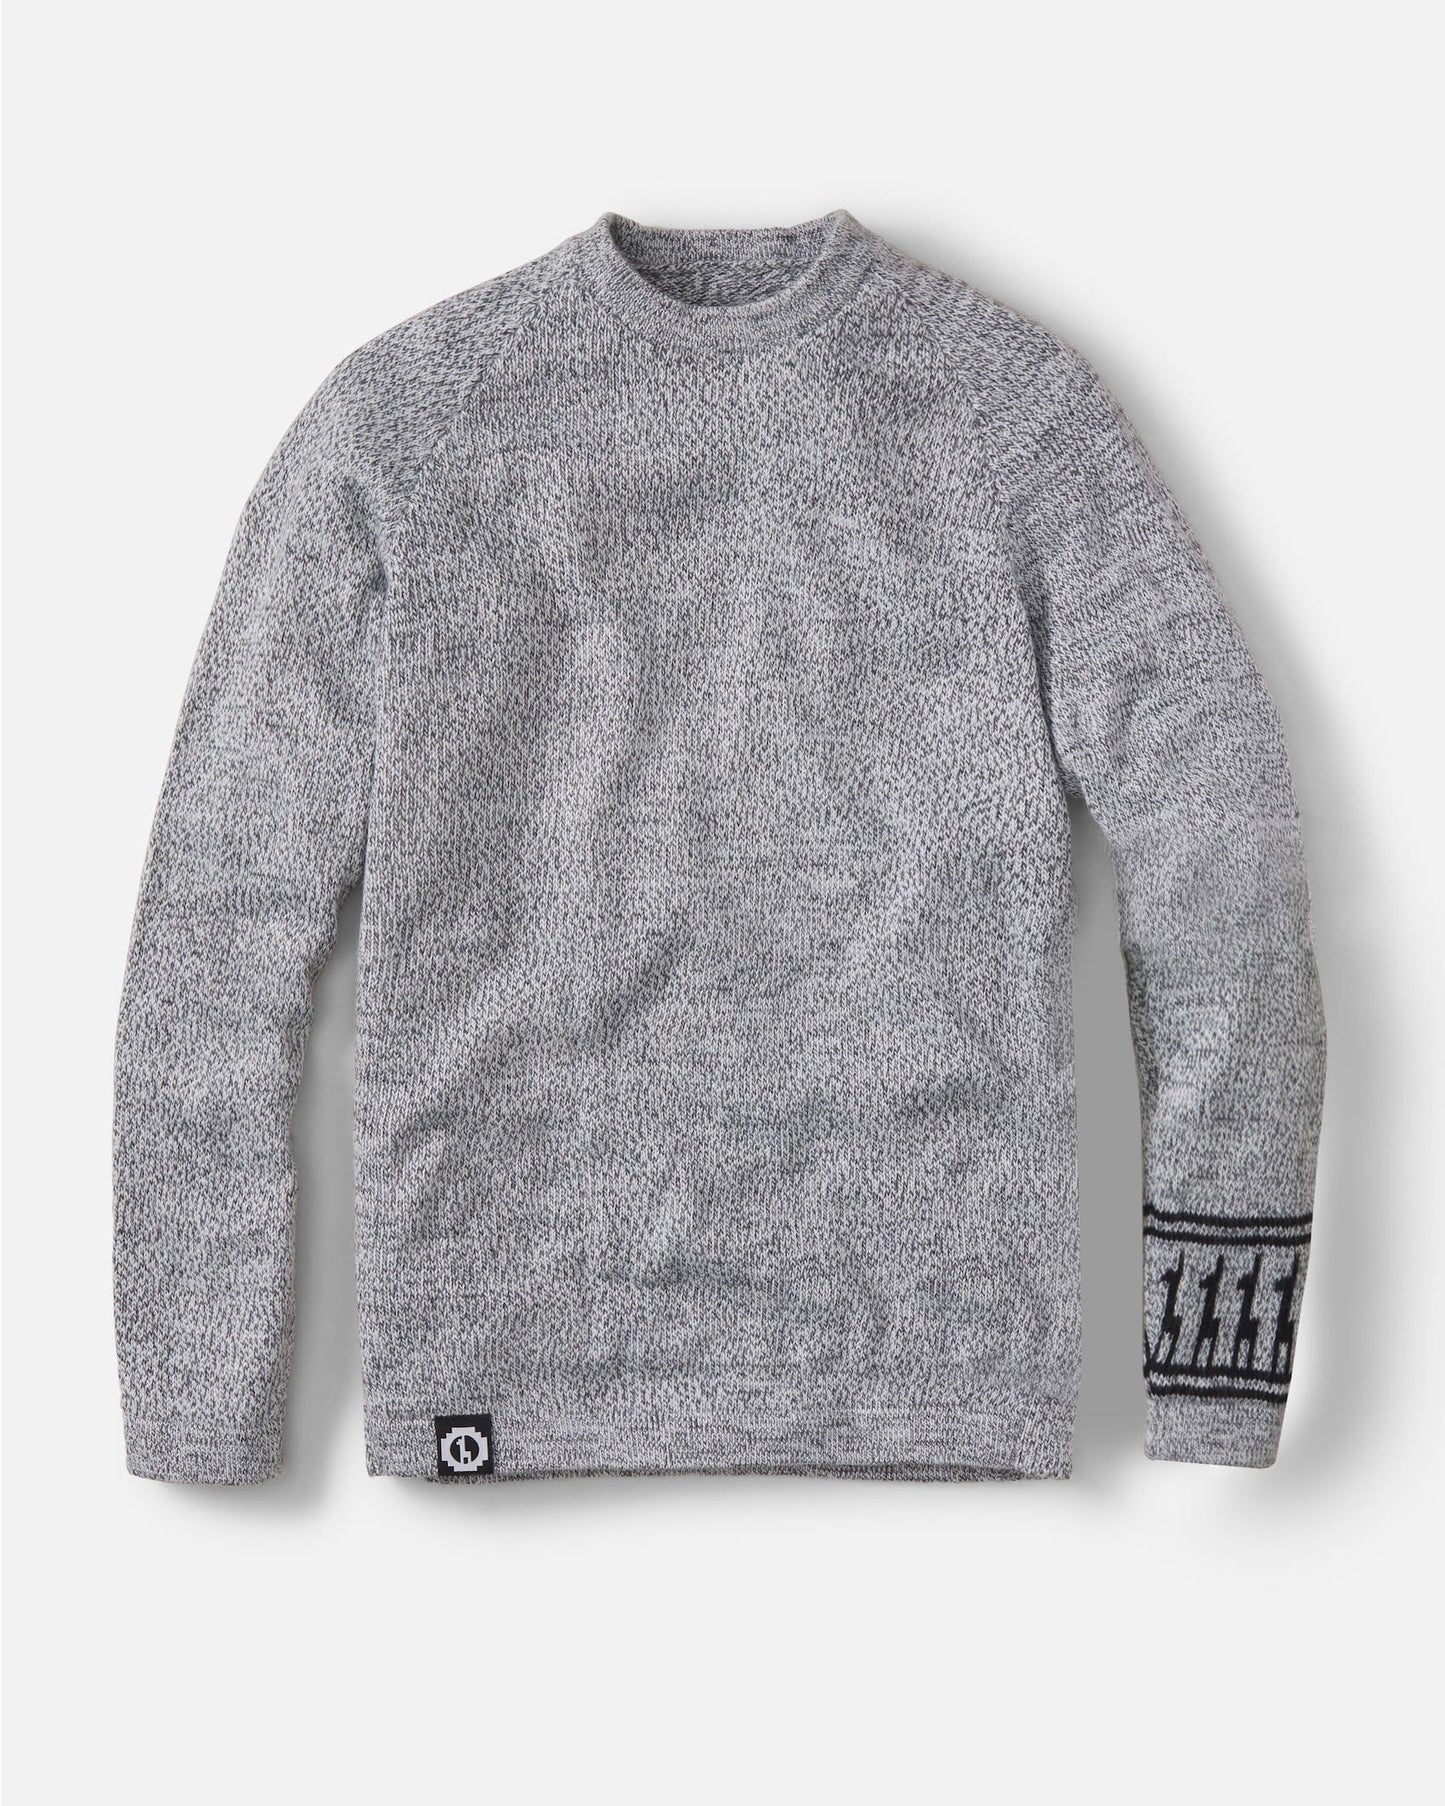 Handknit Crewneck - Luxury Knitwear and Sweatshirts - Ready to